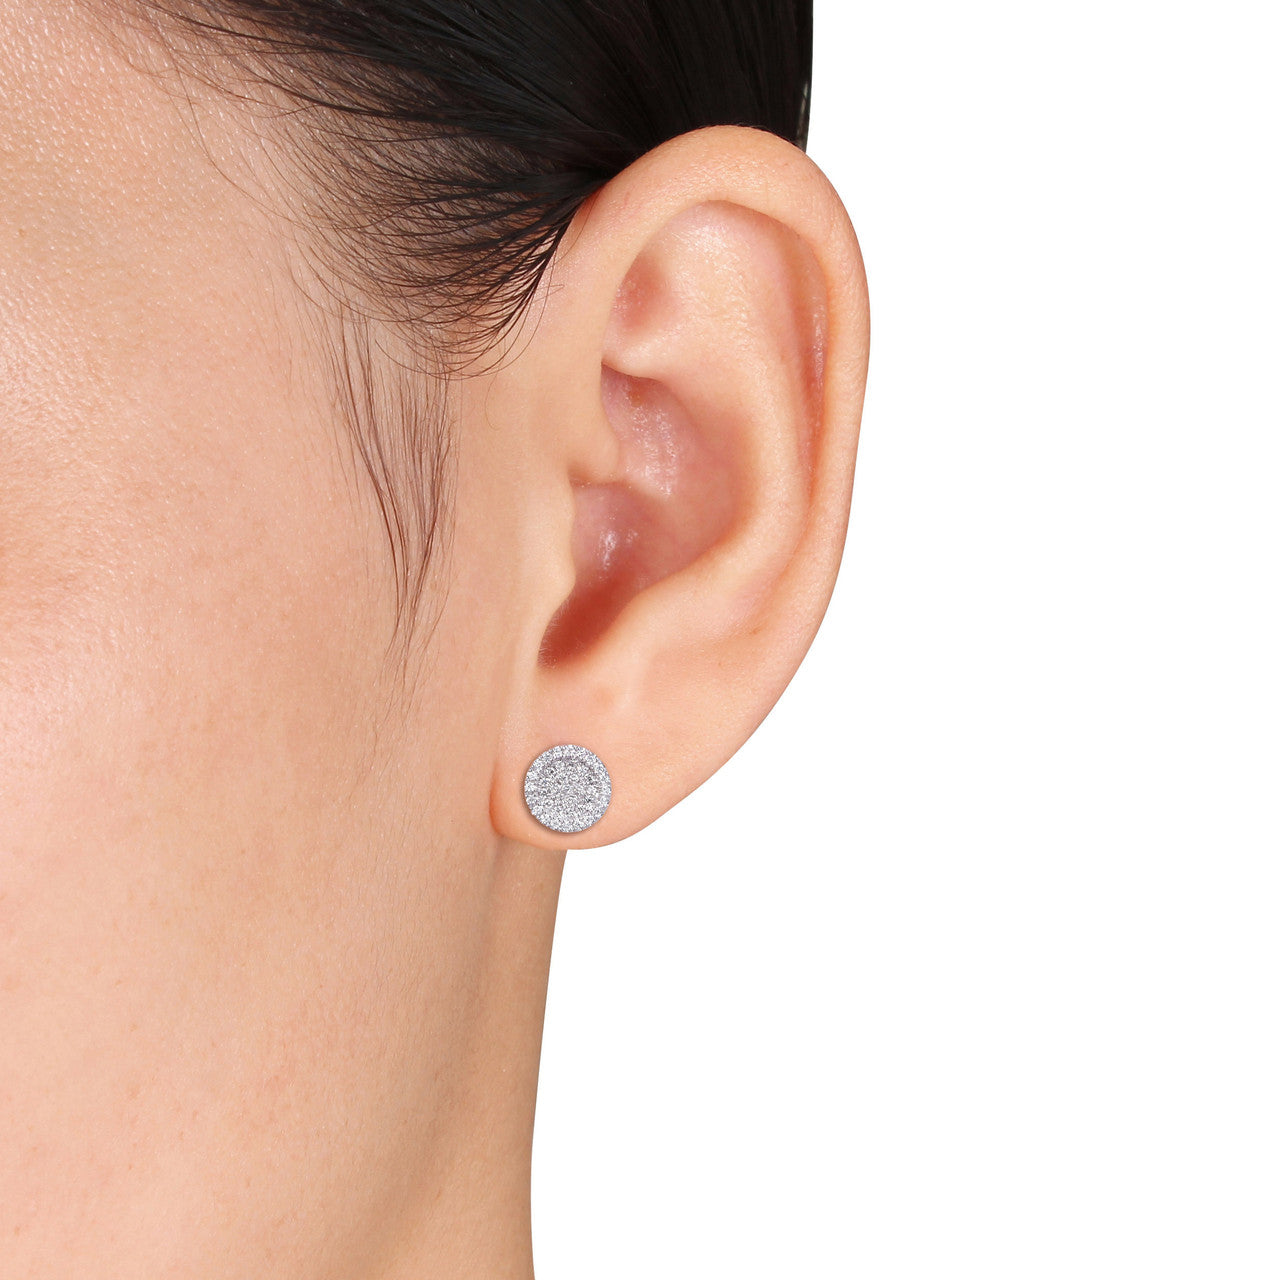 Ice Jewellery 1/3 CT TW Diamond Double Halo Stud Earrings In 14K White Gold - 75000004193 | Ice Jewellery Australia